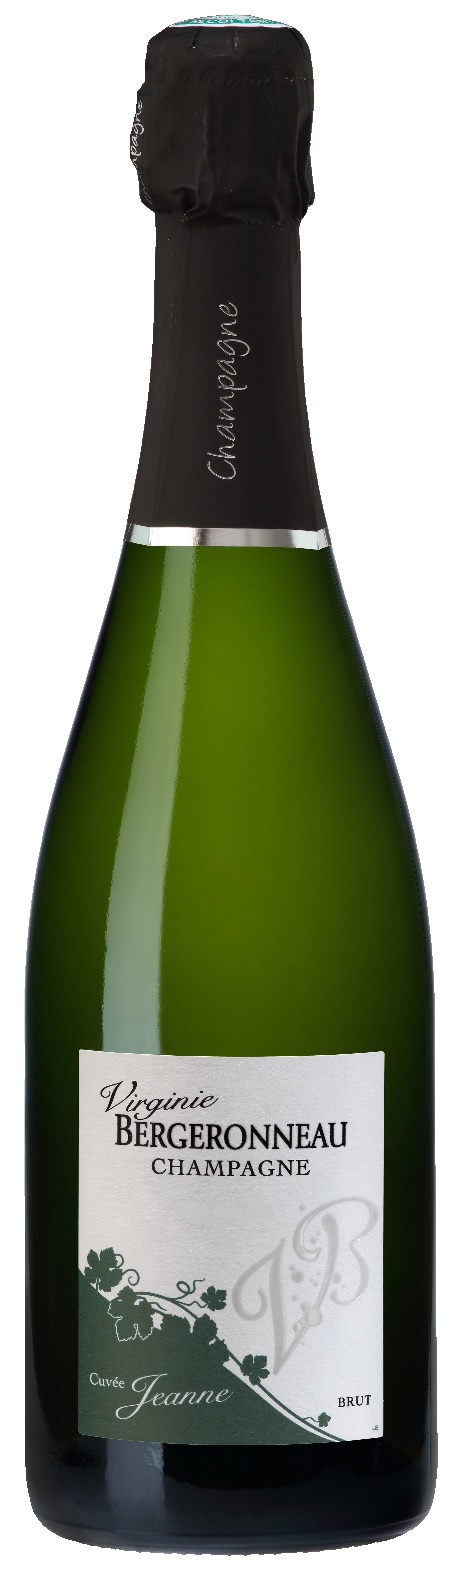 Champagne Cuvée Jeanne Virginie Bergerroneau